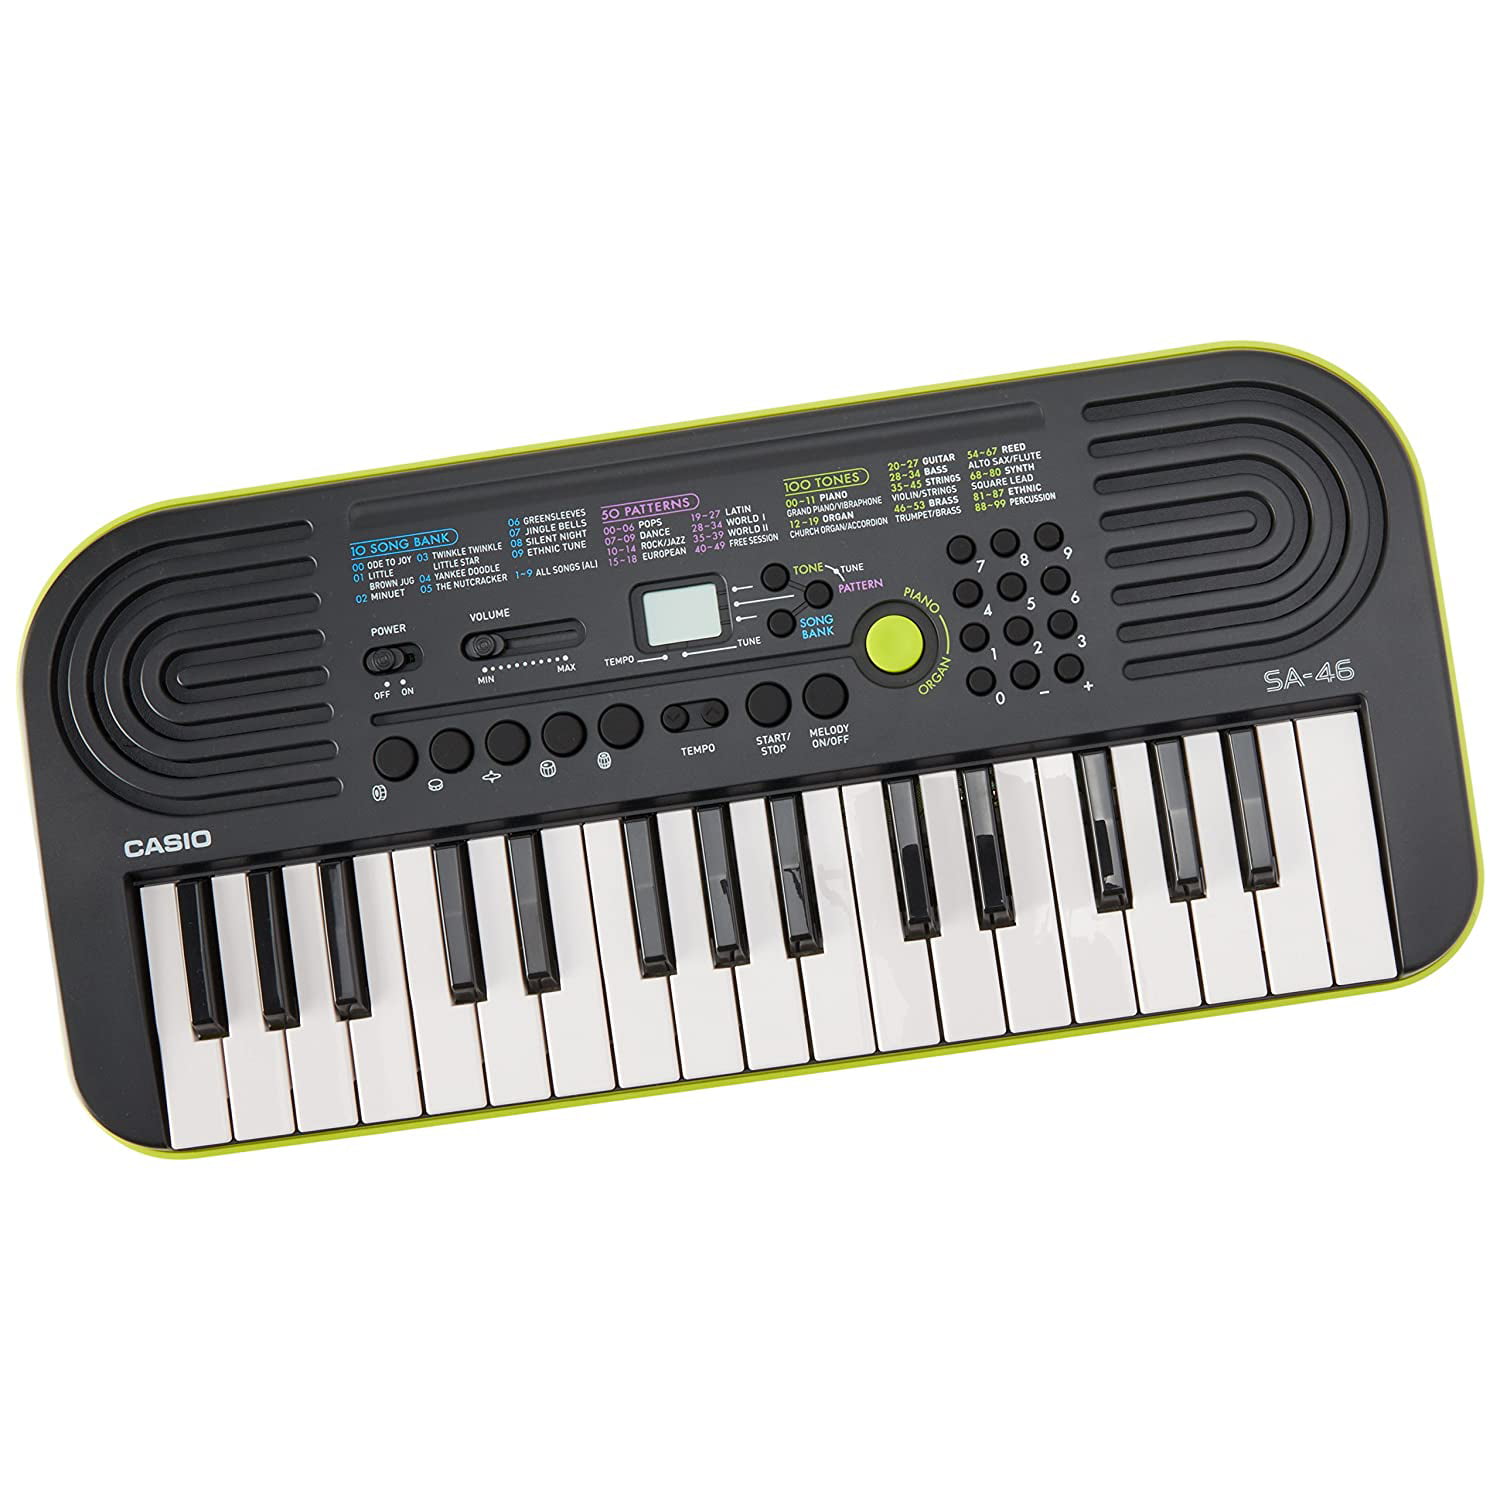 Casio Electric Piano Keyboard Music 44 Mini Keys Organ Percussion Small Digital 